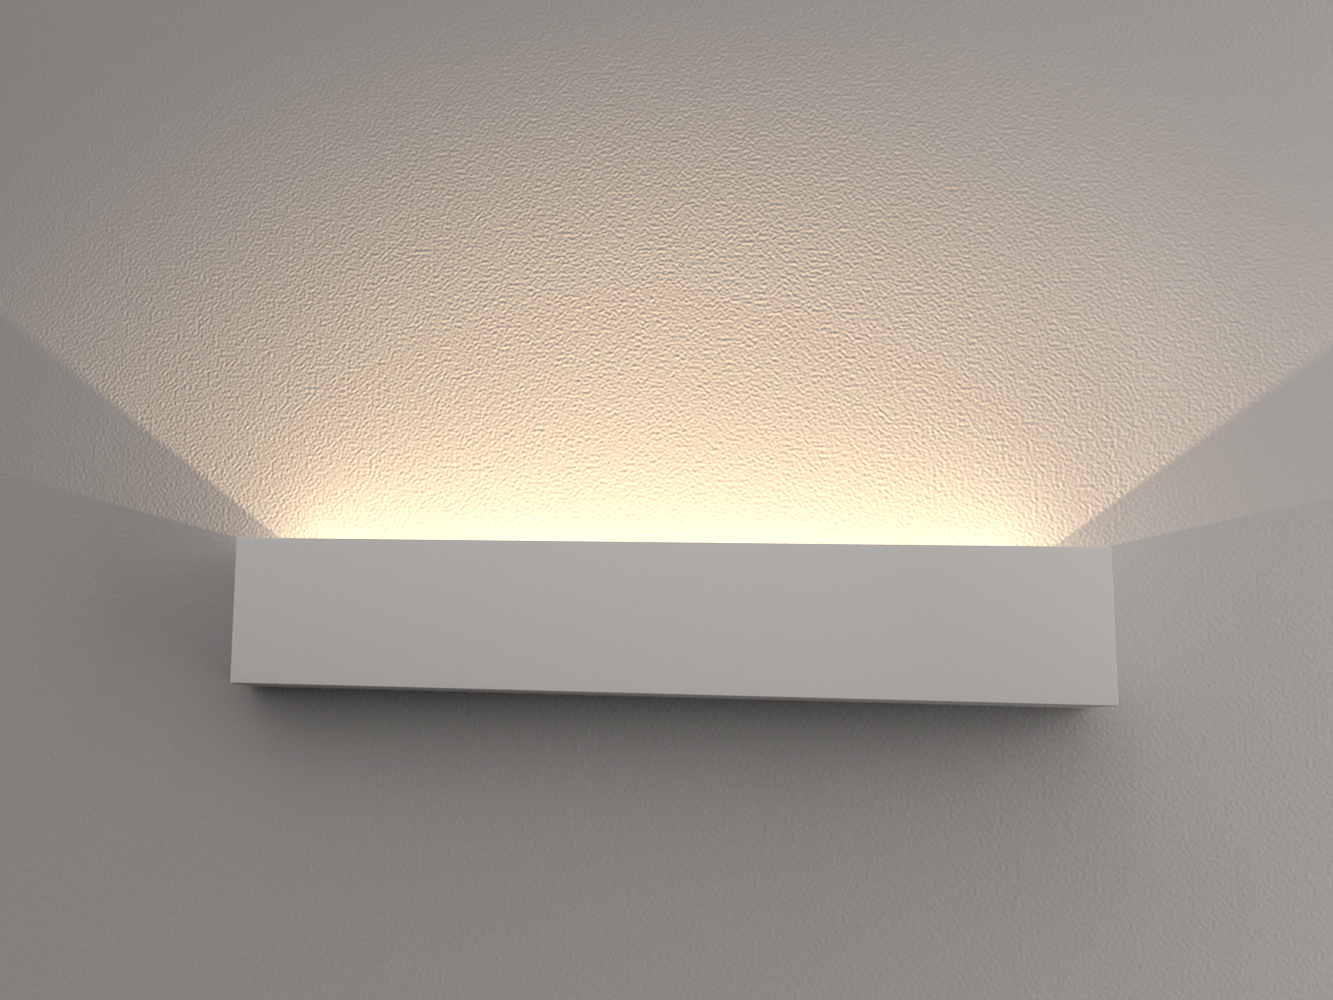 LVY-W0162 Gypsum plaster LED bracket wall lamp